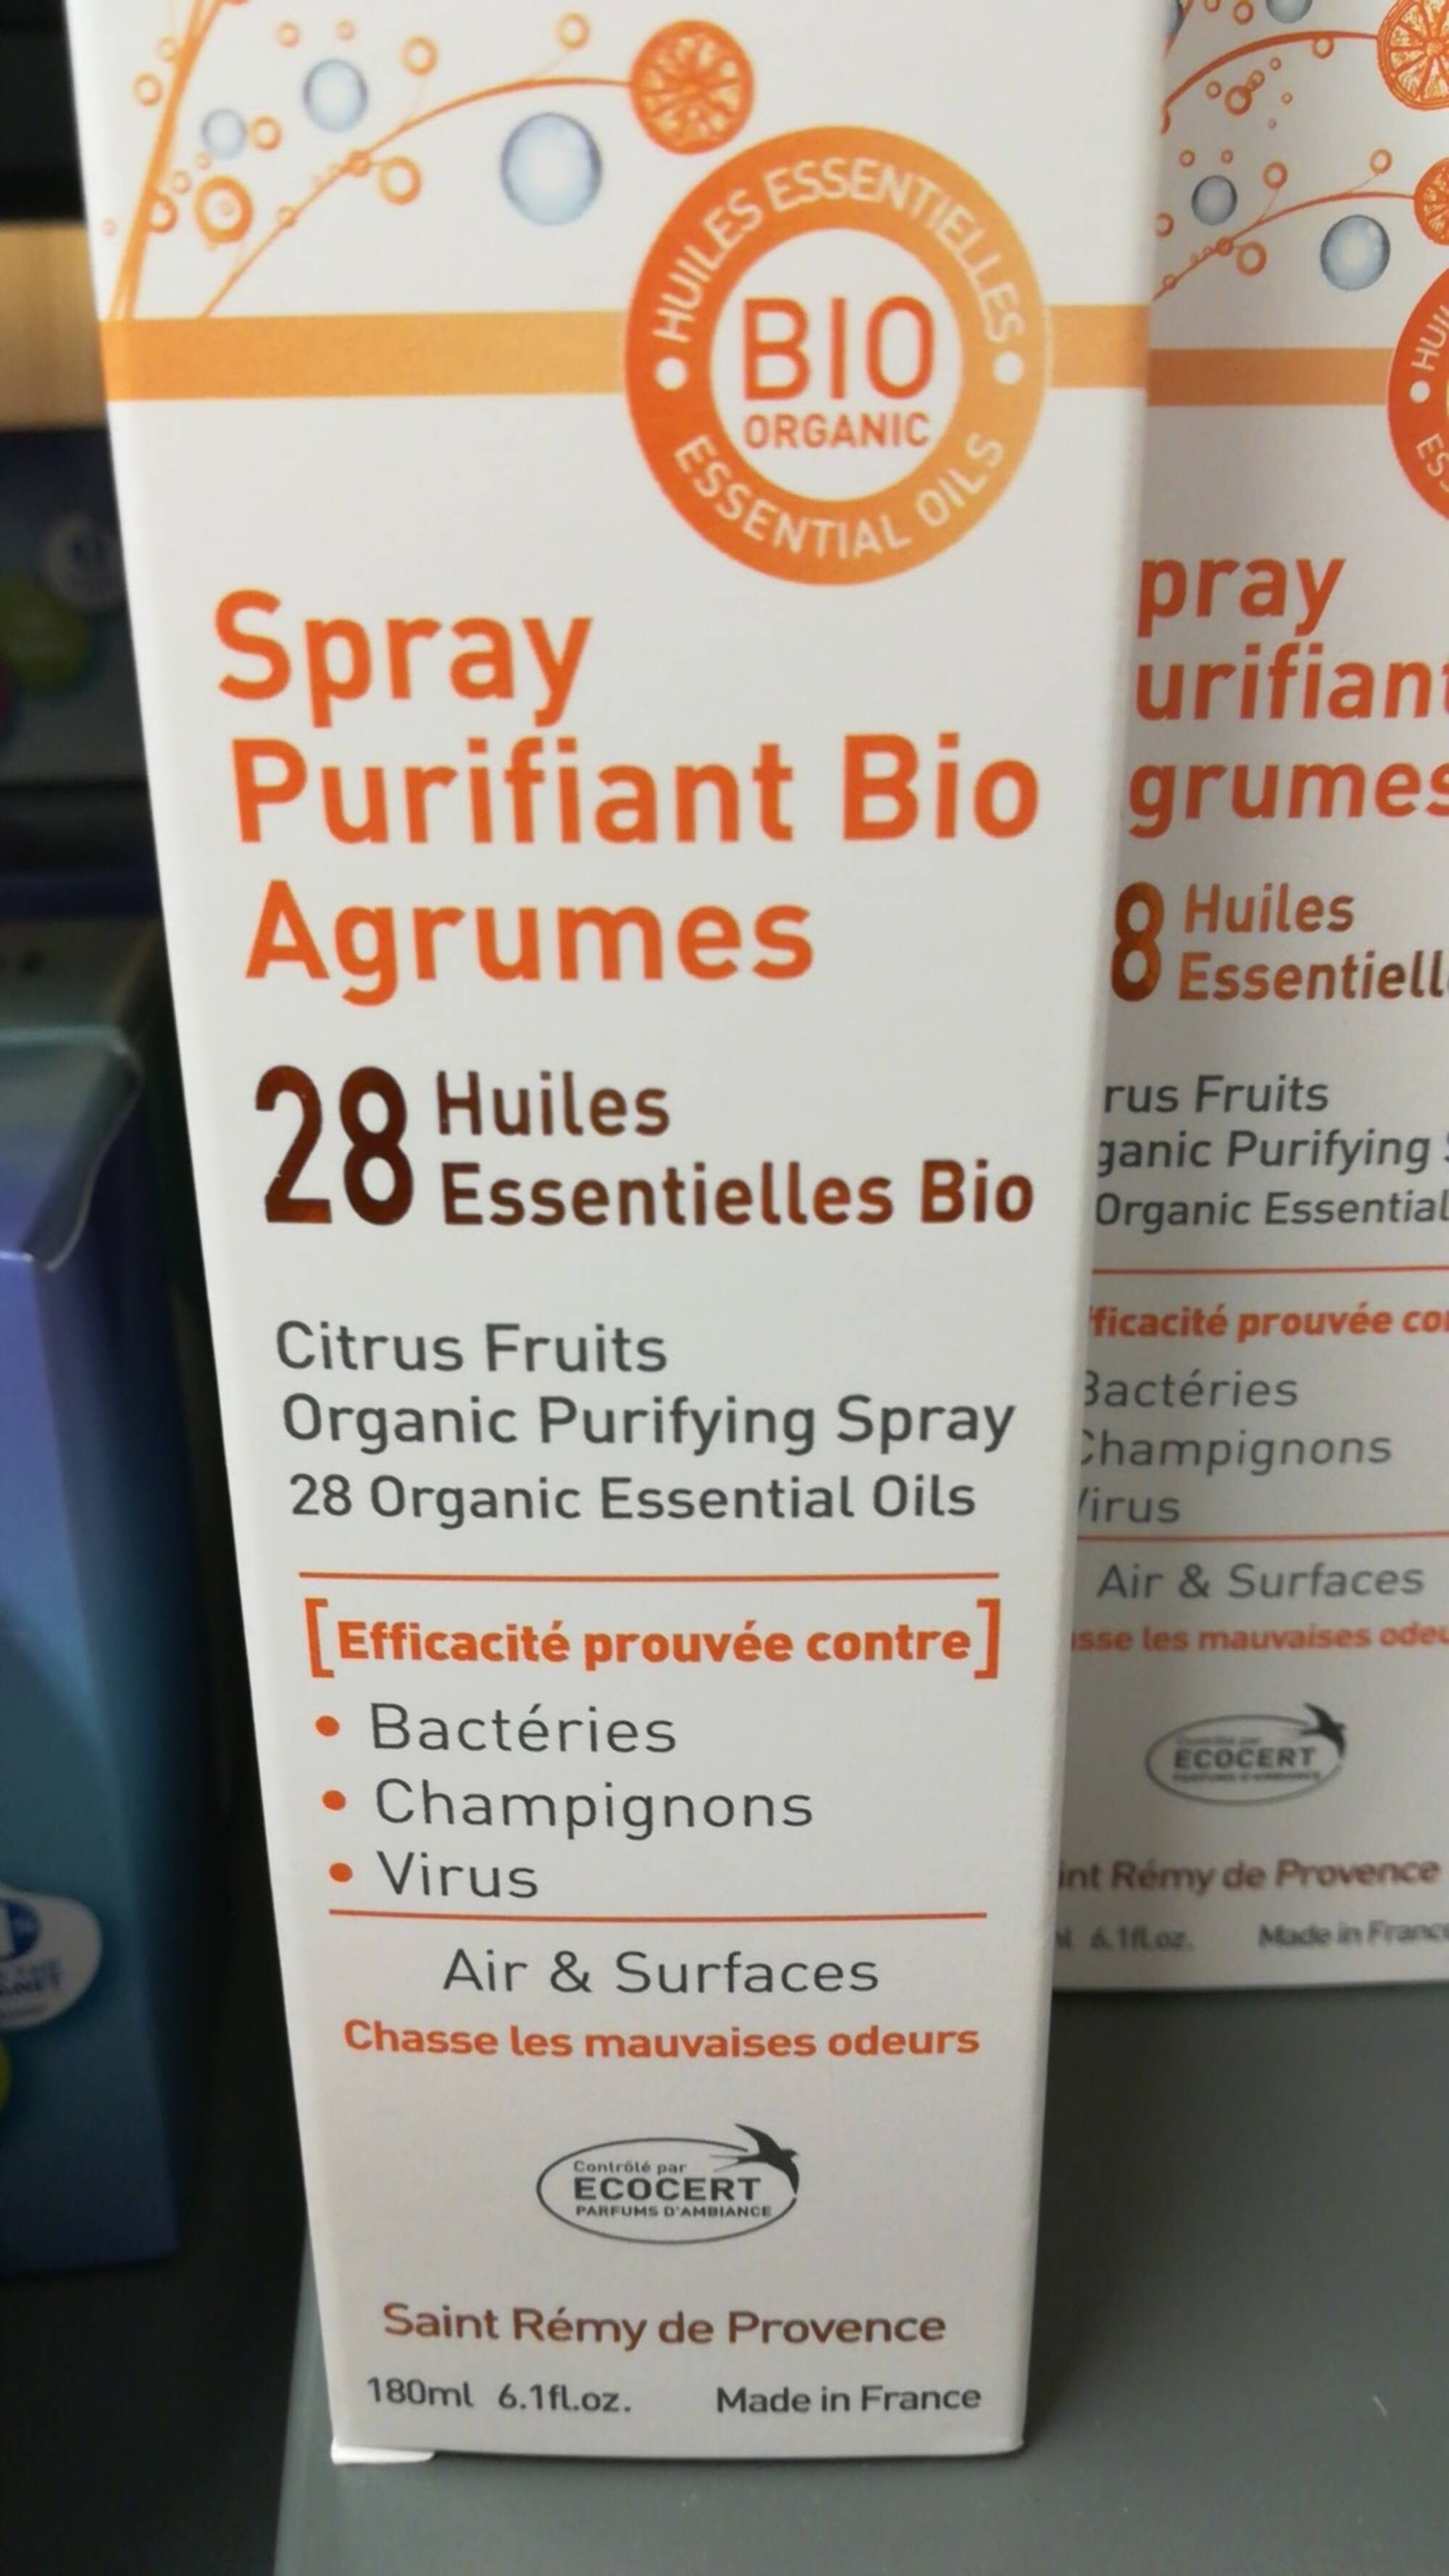 FLORAME - Spray purifiant bio Agrumes 28 huiles essentielles bio